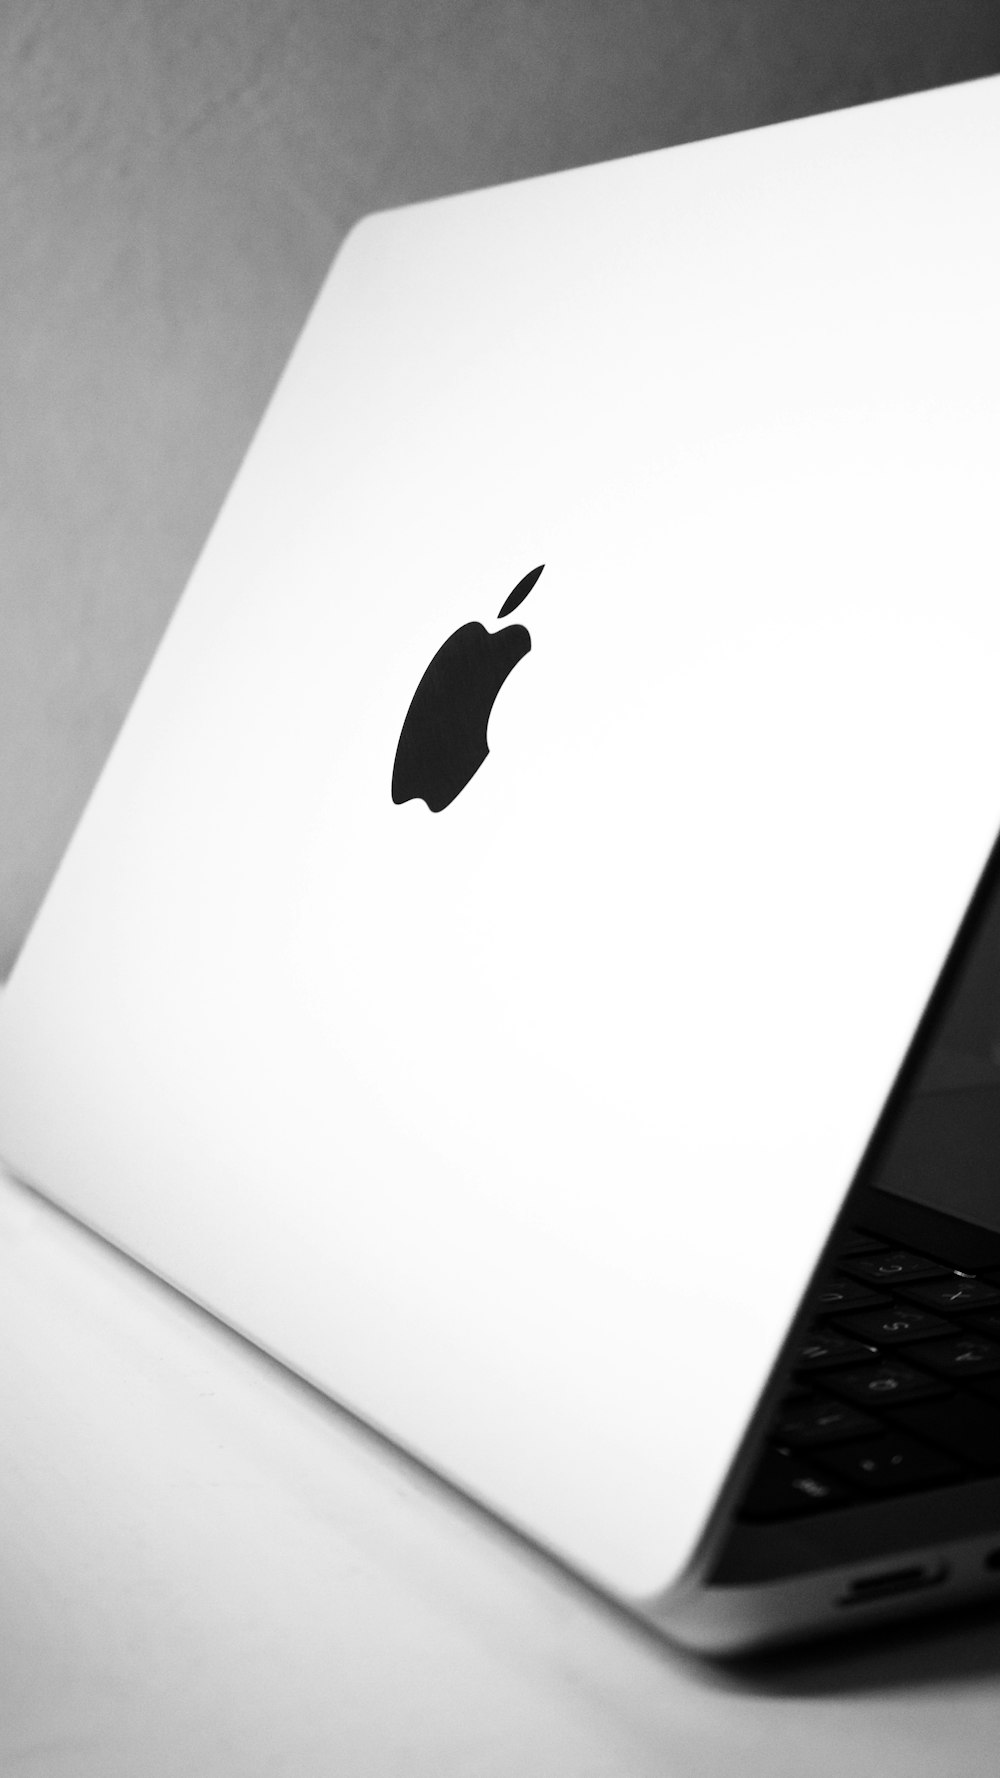 Appleラップトップの白黒写真